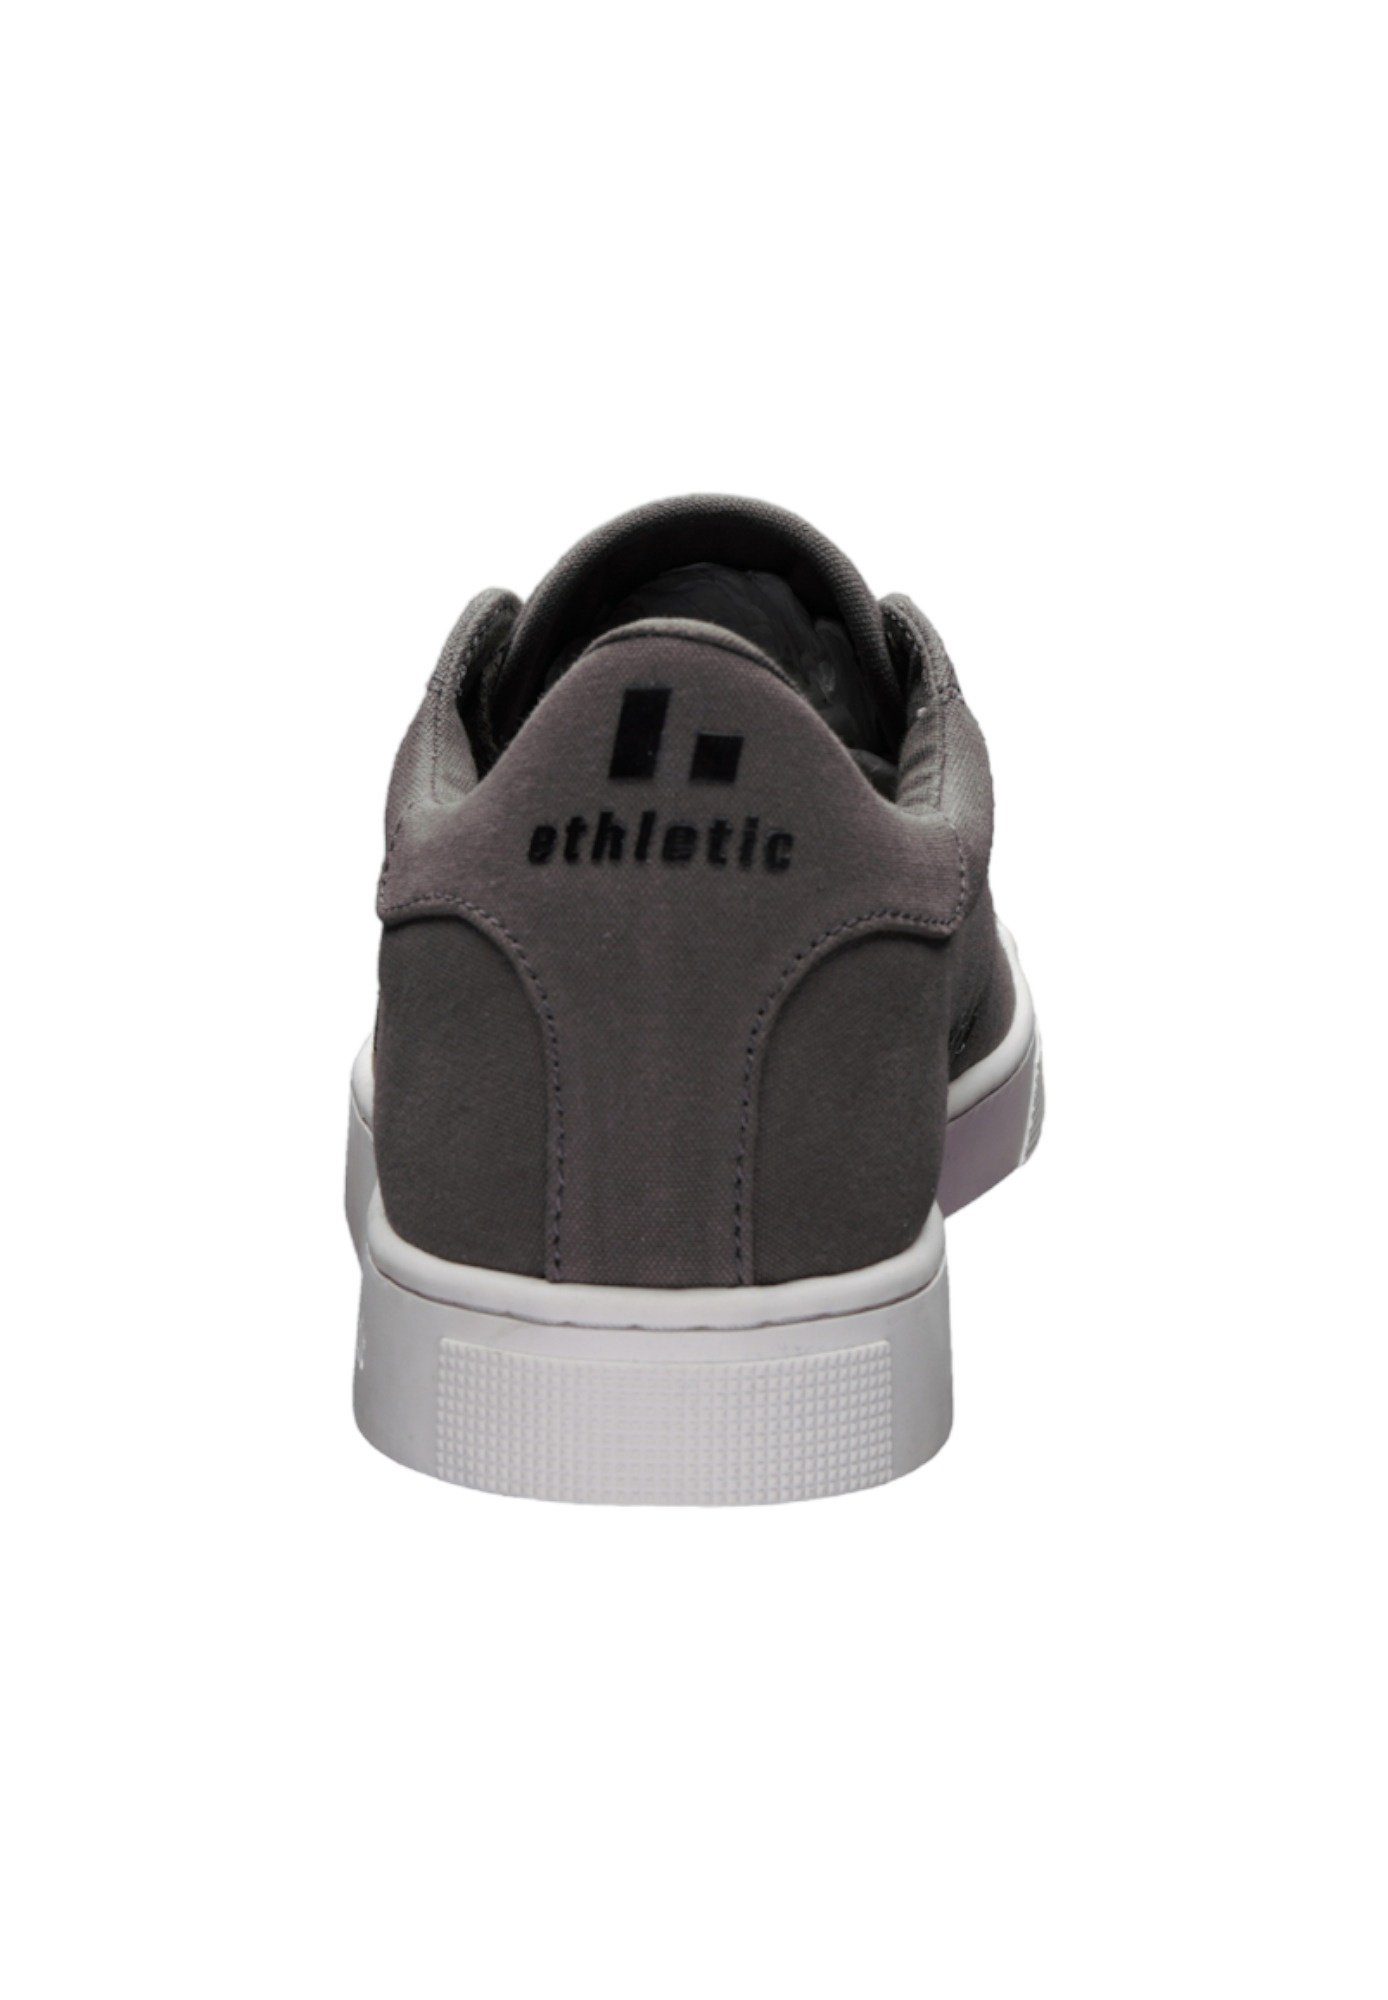 Black Cut Grey Produkt - Fairtrade Lo Donkey Jet ETHLETIC Active Sneaker